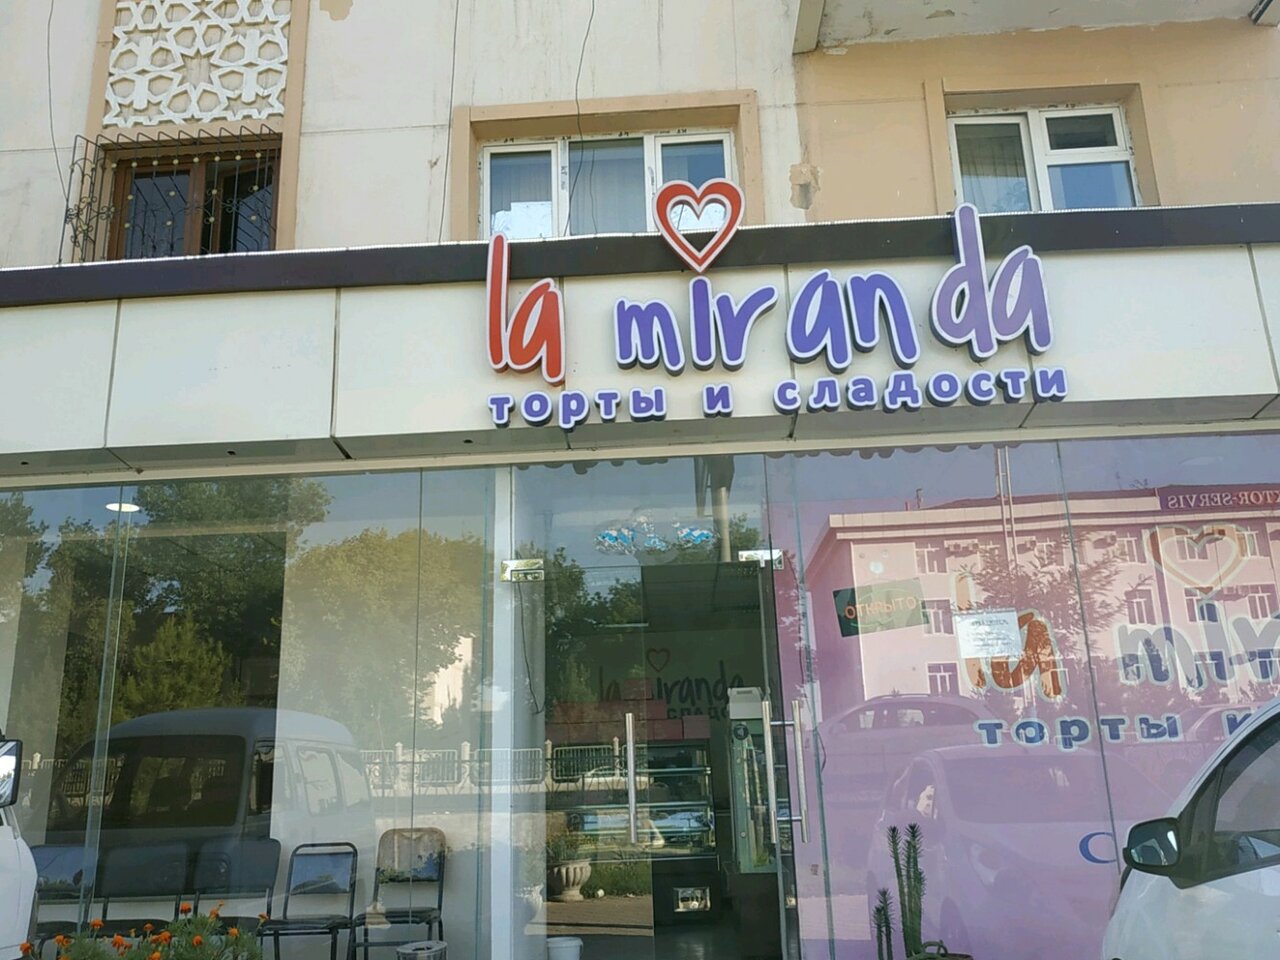 La Miranda - торты и сладости